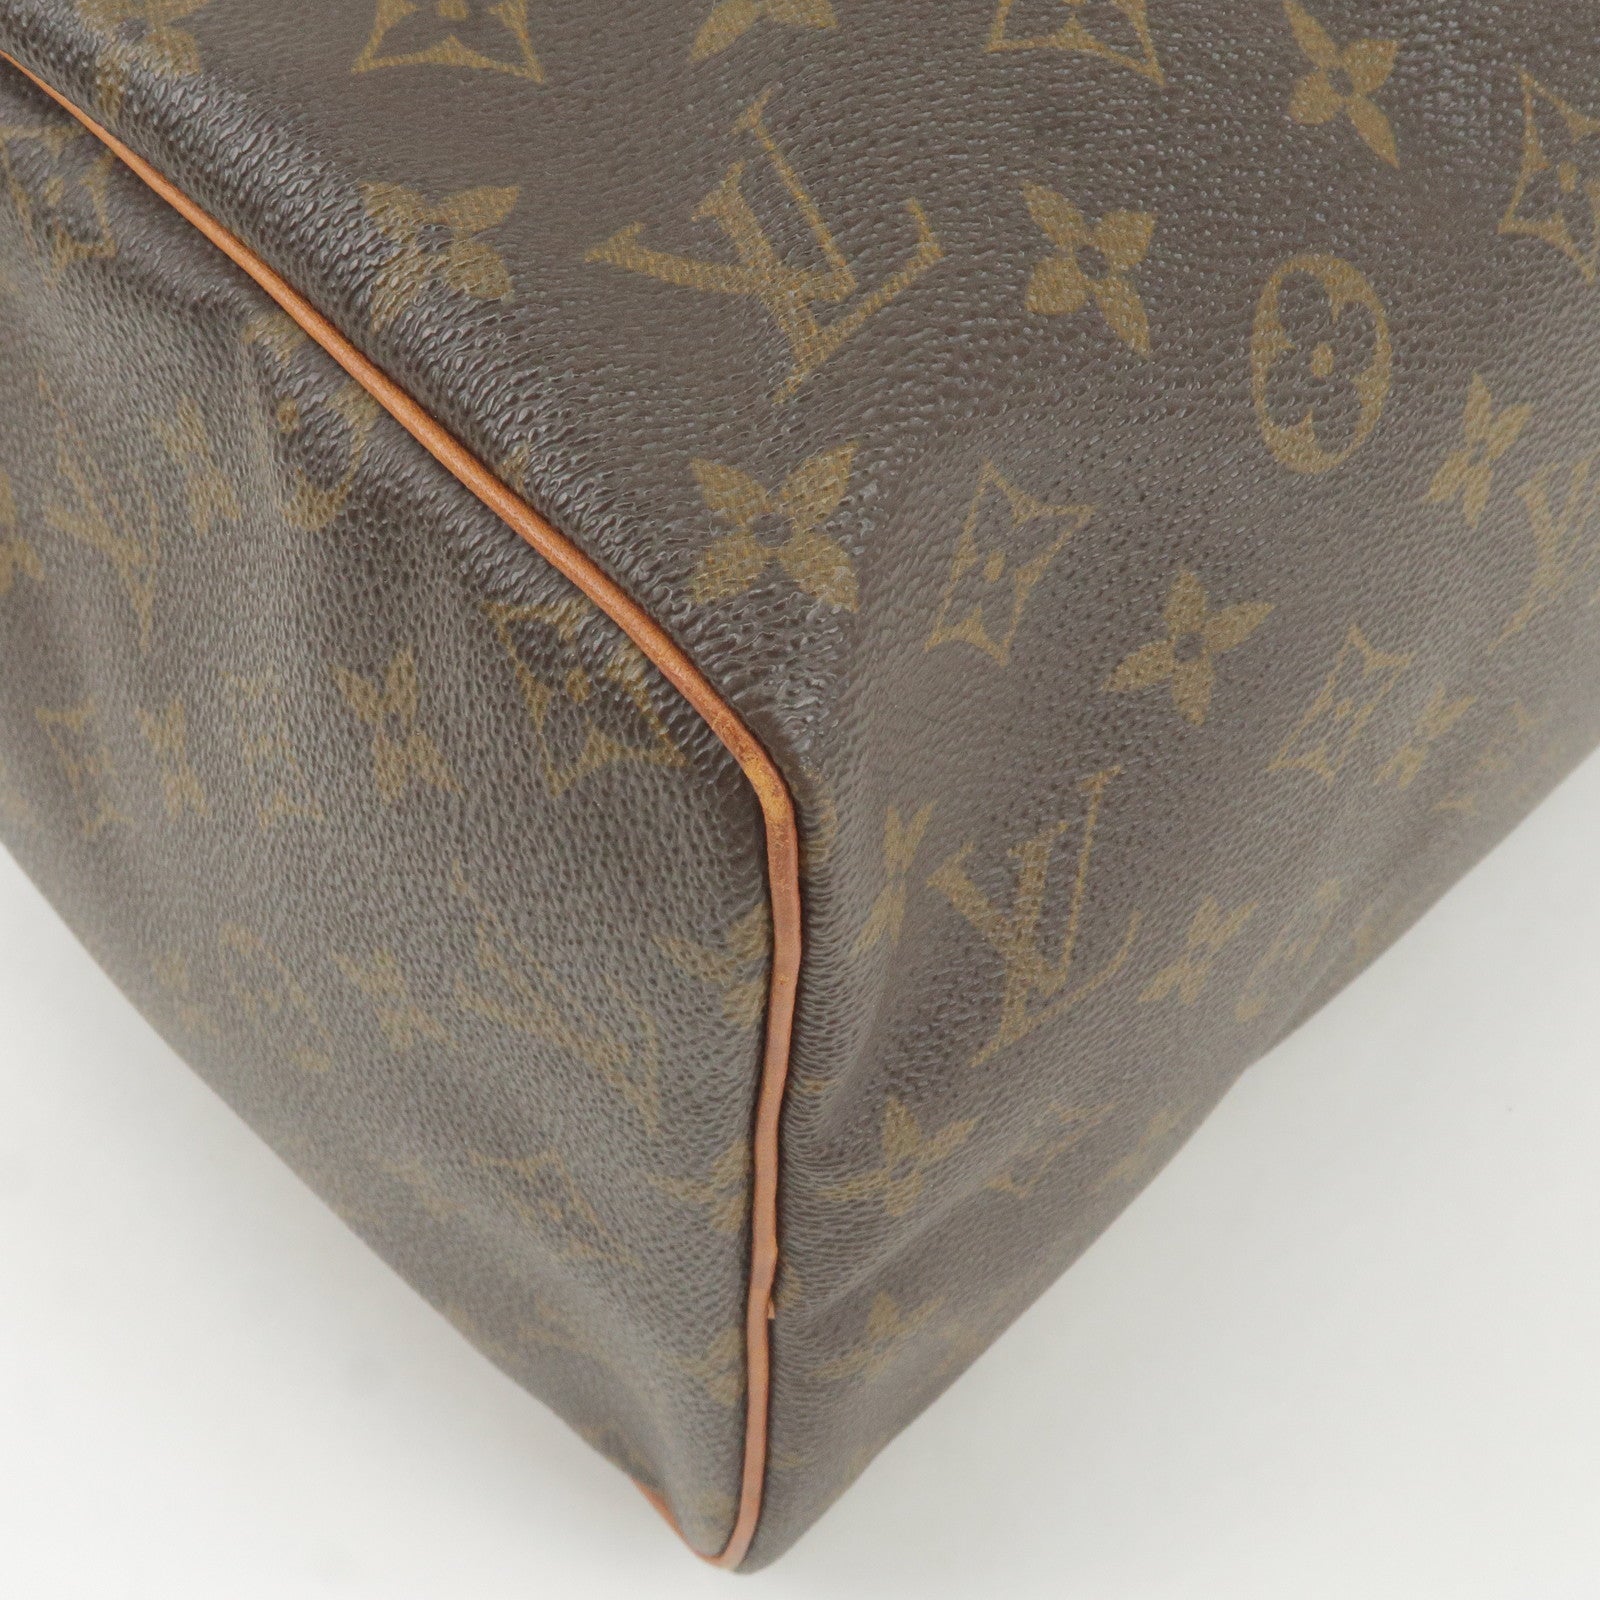 Louis Vuitton 1999 pre-owned Malesherbes Monogram Tote Bag - Farfetch